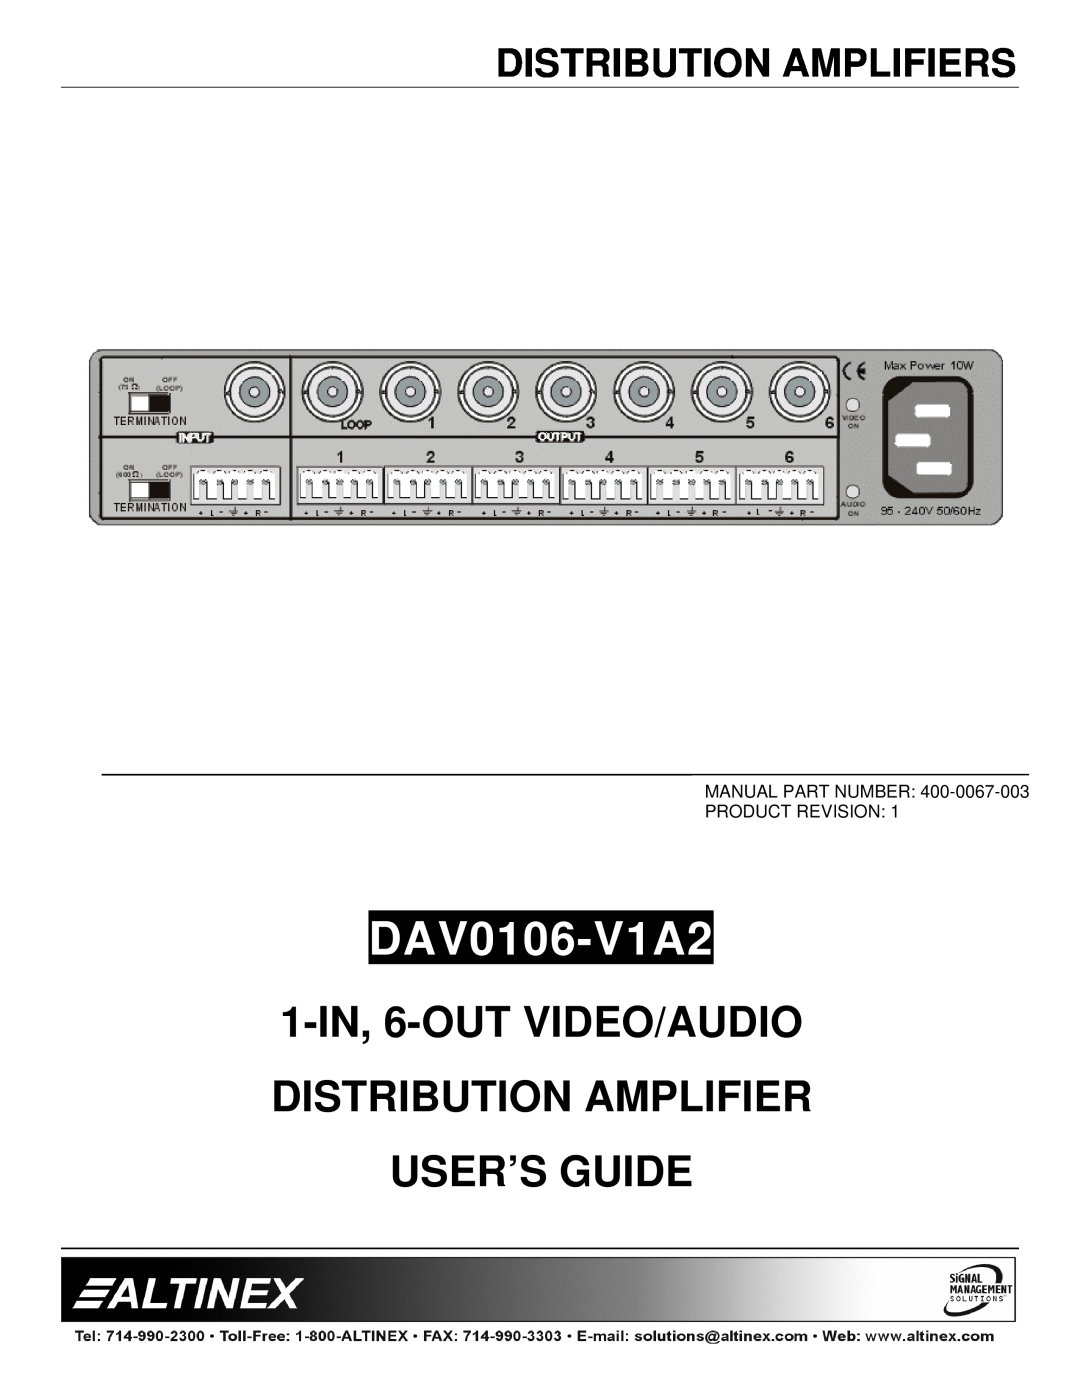 Altinex DAV0106-V1A2 manual Distribution Amplifiers, 1-IN, 6-OUT VIDEO/AUDIO DISTRIBUTION AMPLIFIER USER’S GUIDE 